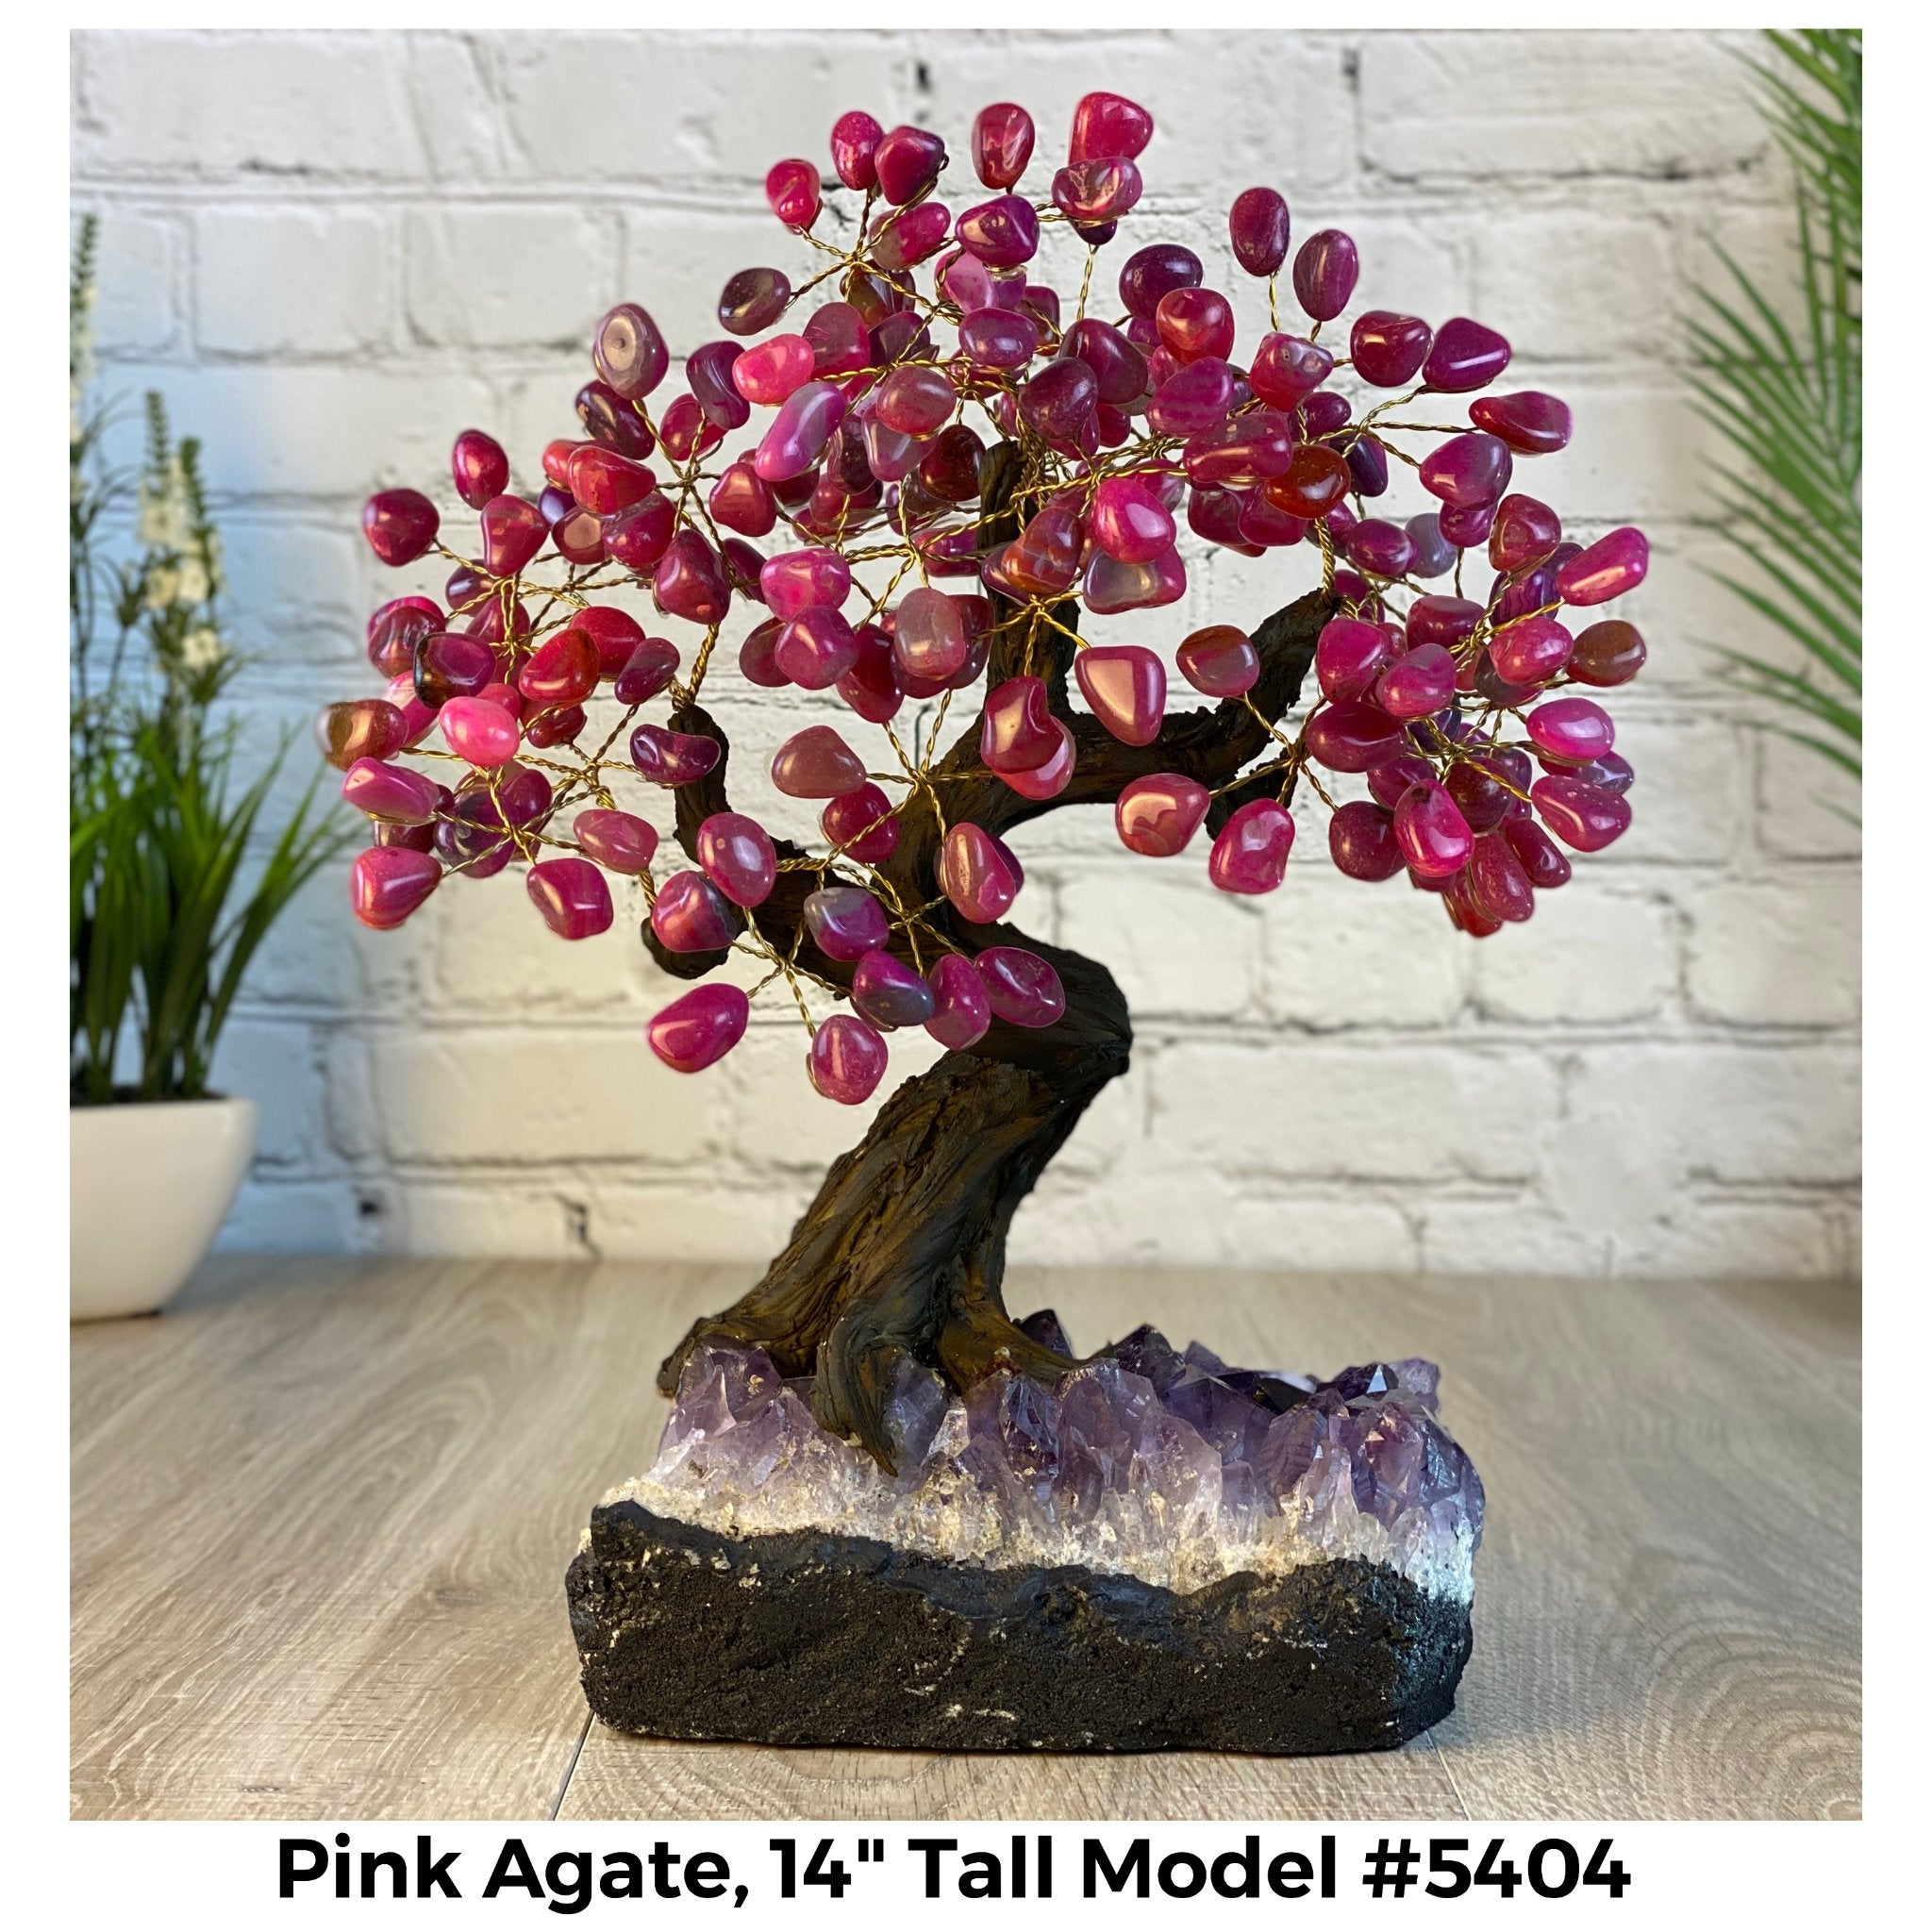 Pink Agate 14" Tall Handmade Gemstone Tree on a Crystal base, 180 Gems #5404PNKA - Brazil GemsBrazil GemsPink Agate 14" Tall Handmade Gemstone Tree on a Crystal base, 180 Gems #5404PNKAGemstone Trees5404PNKA